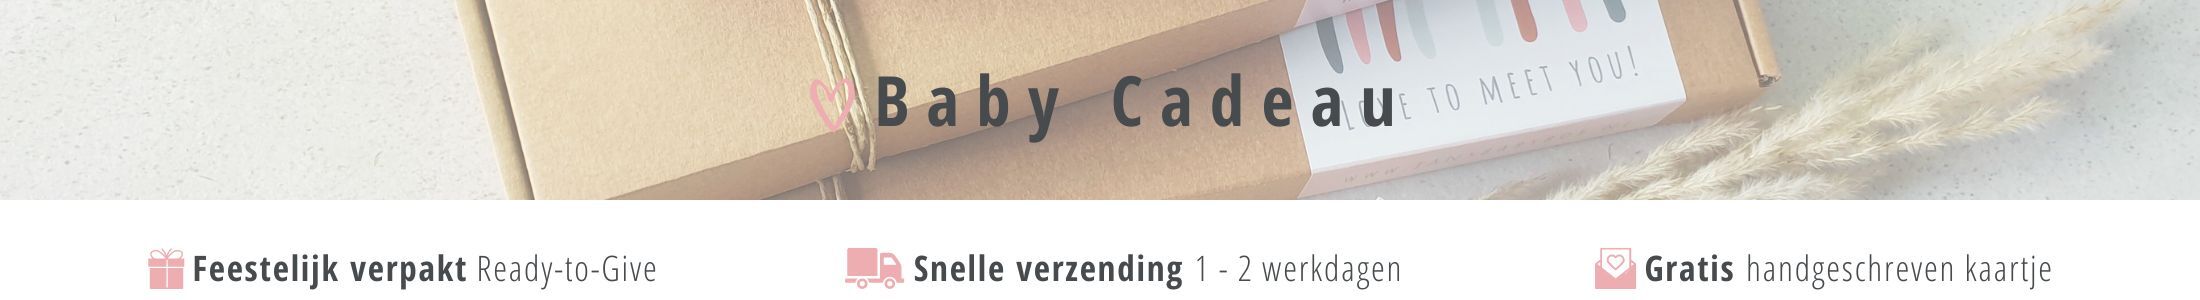 Jans Babybox - Baby Cadeau